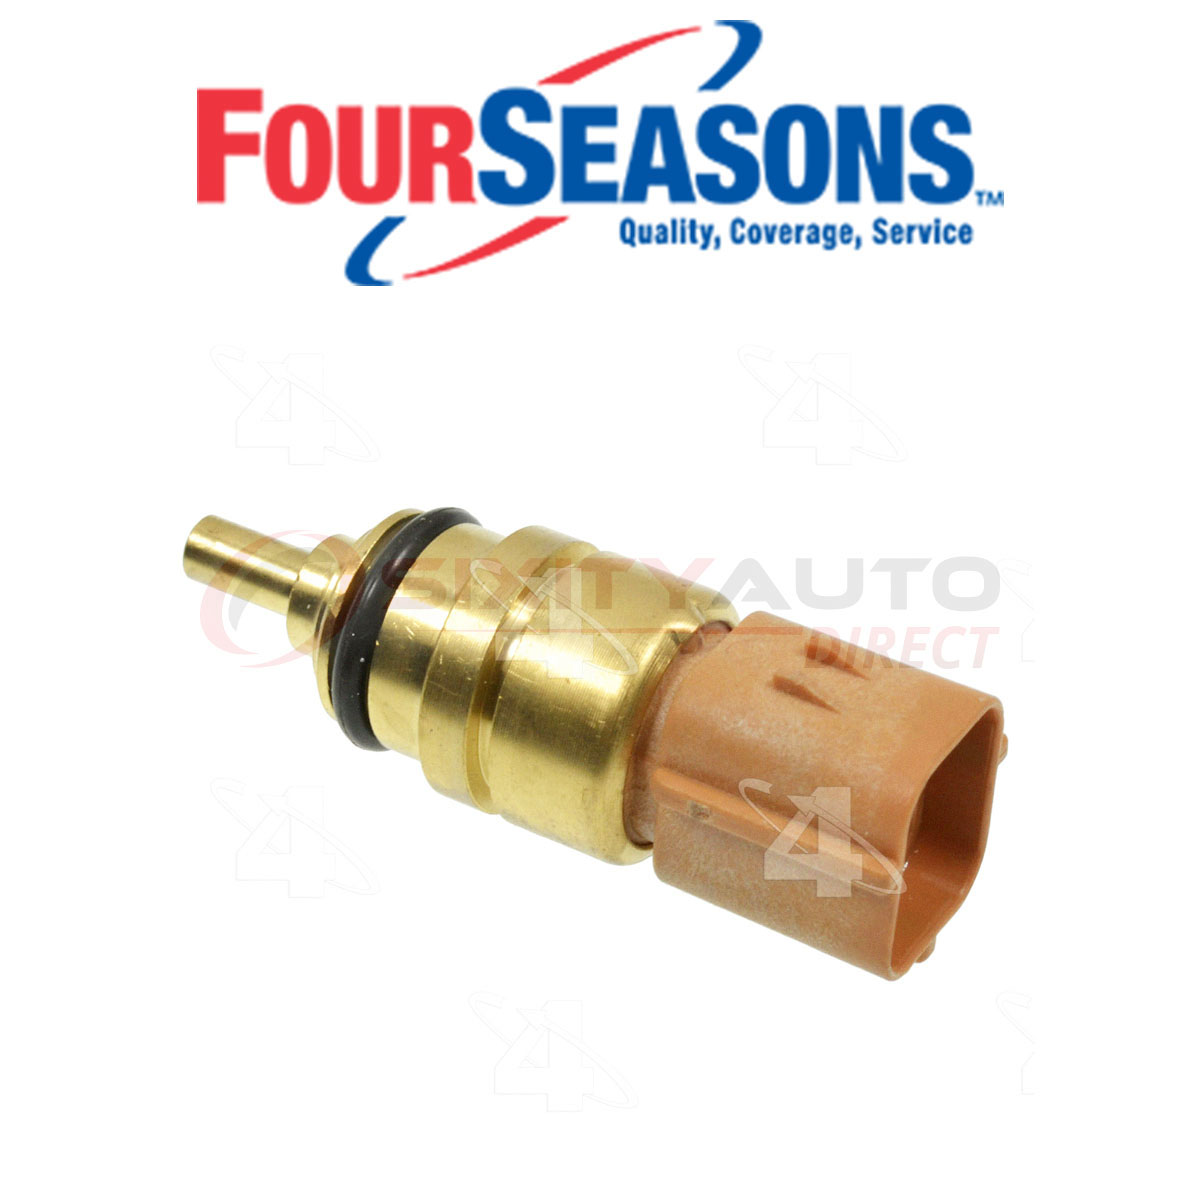 Four Seasons Coolant Temperature Sensor for 2011-2014 Kia Sorento 2.4L 2011 Kia Sorento Transmission Temperature Sensor Replacement